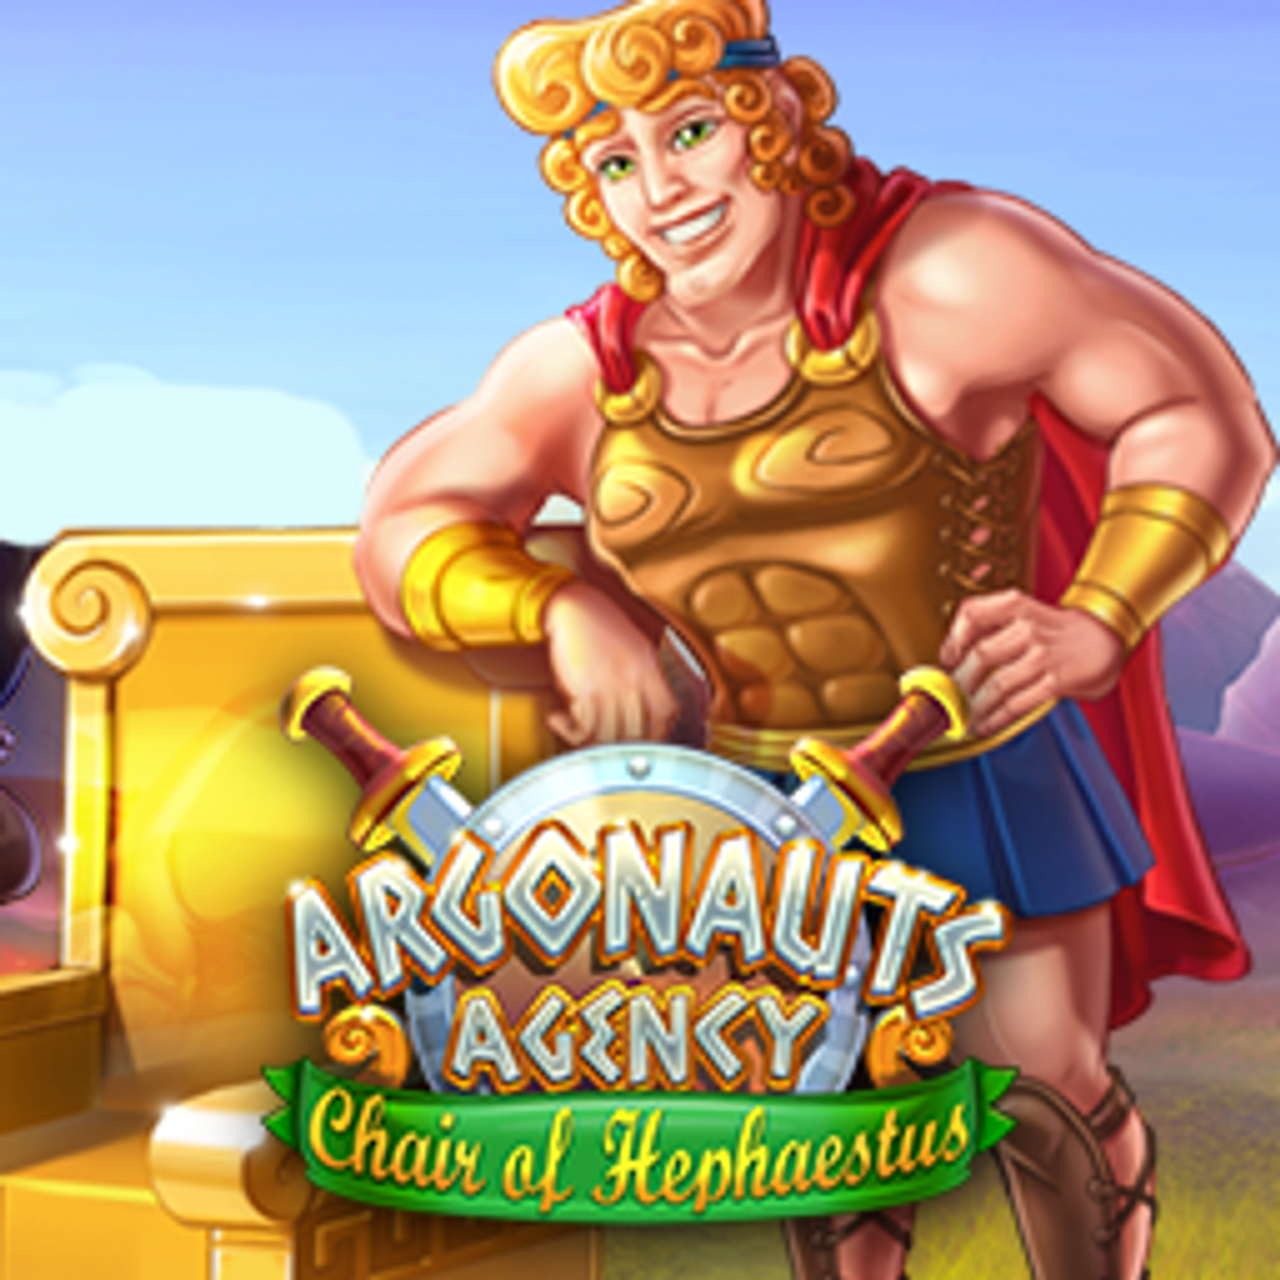 Argonauts Agency: Chair of Hephaestus